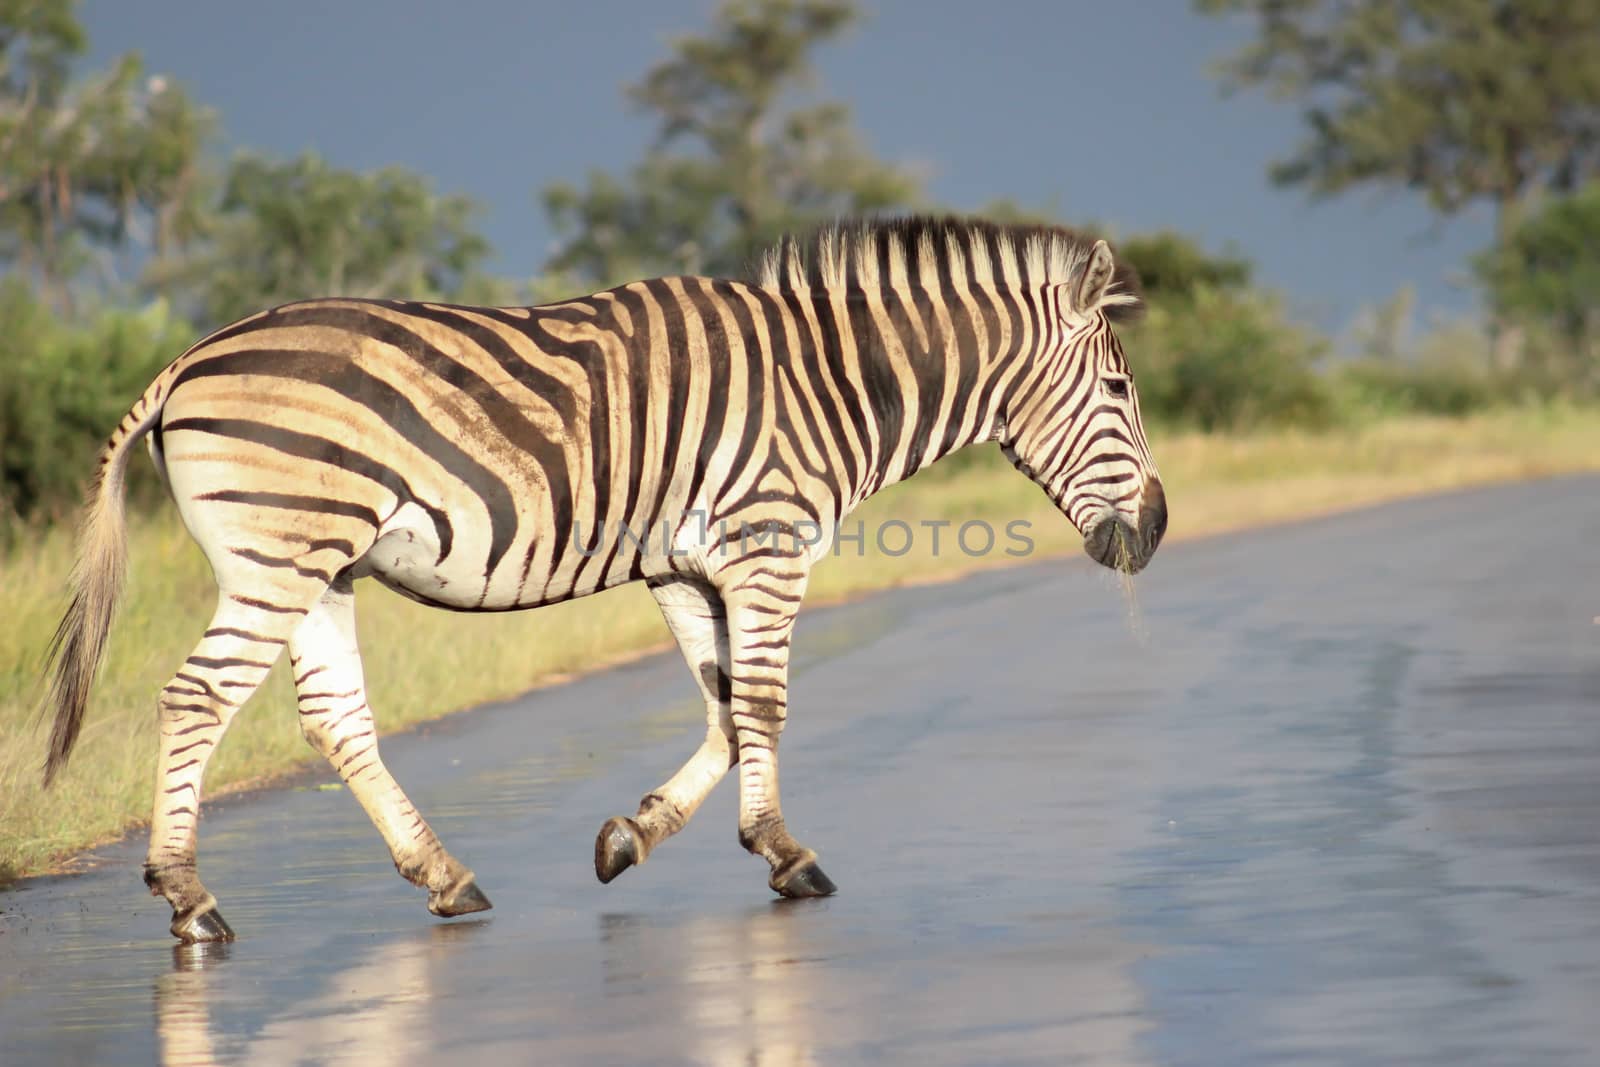 Plains zebra walking on wet road by RiaanAlbrecht